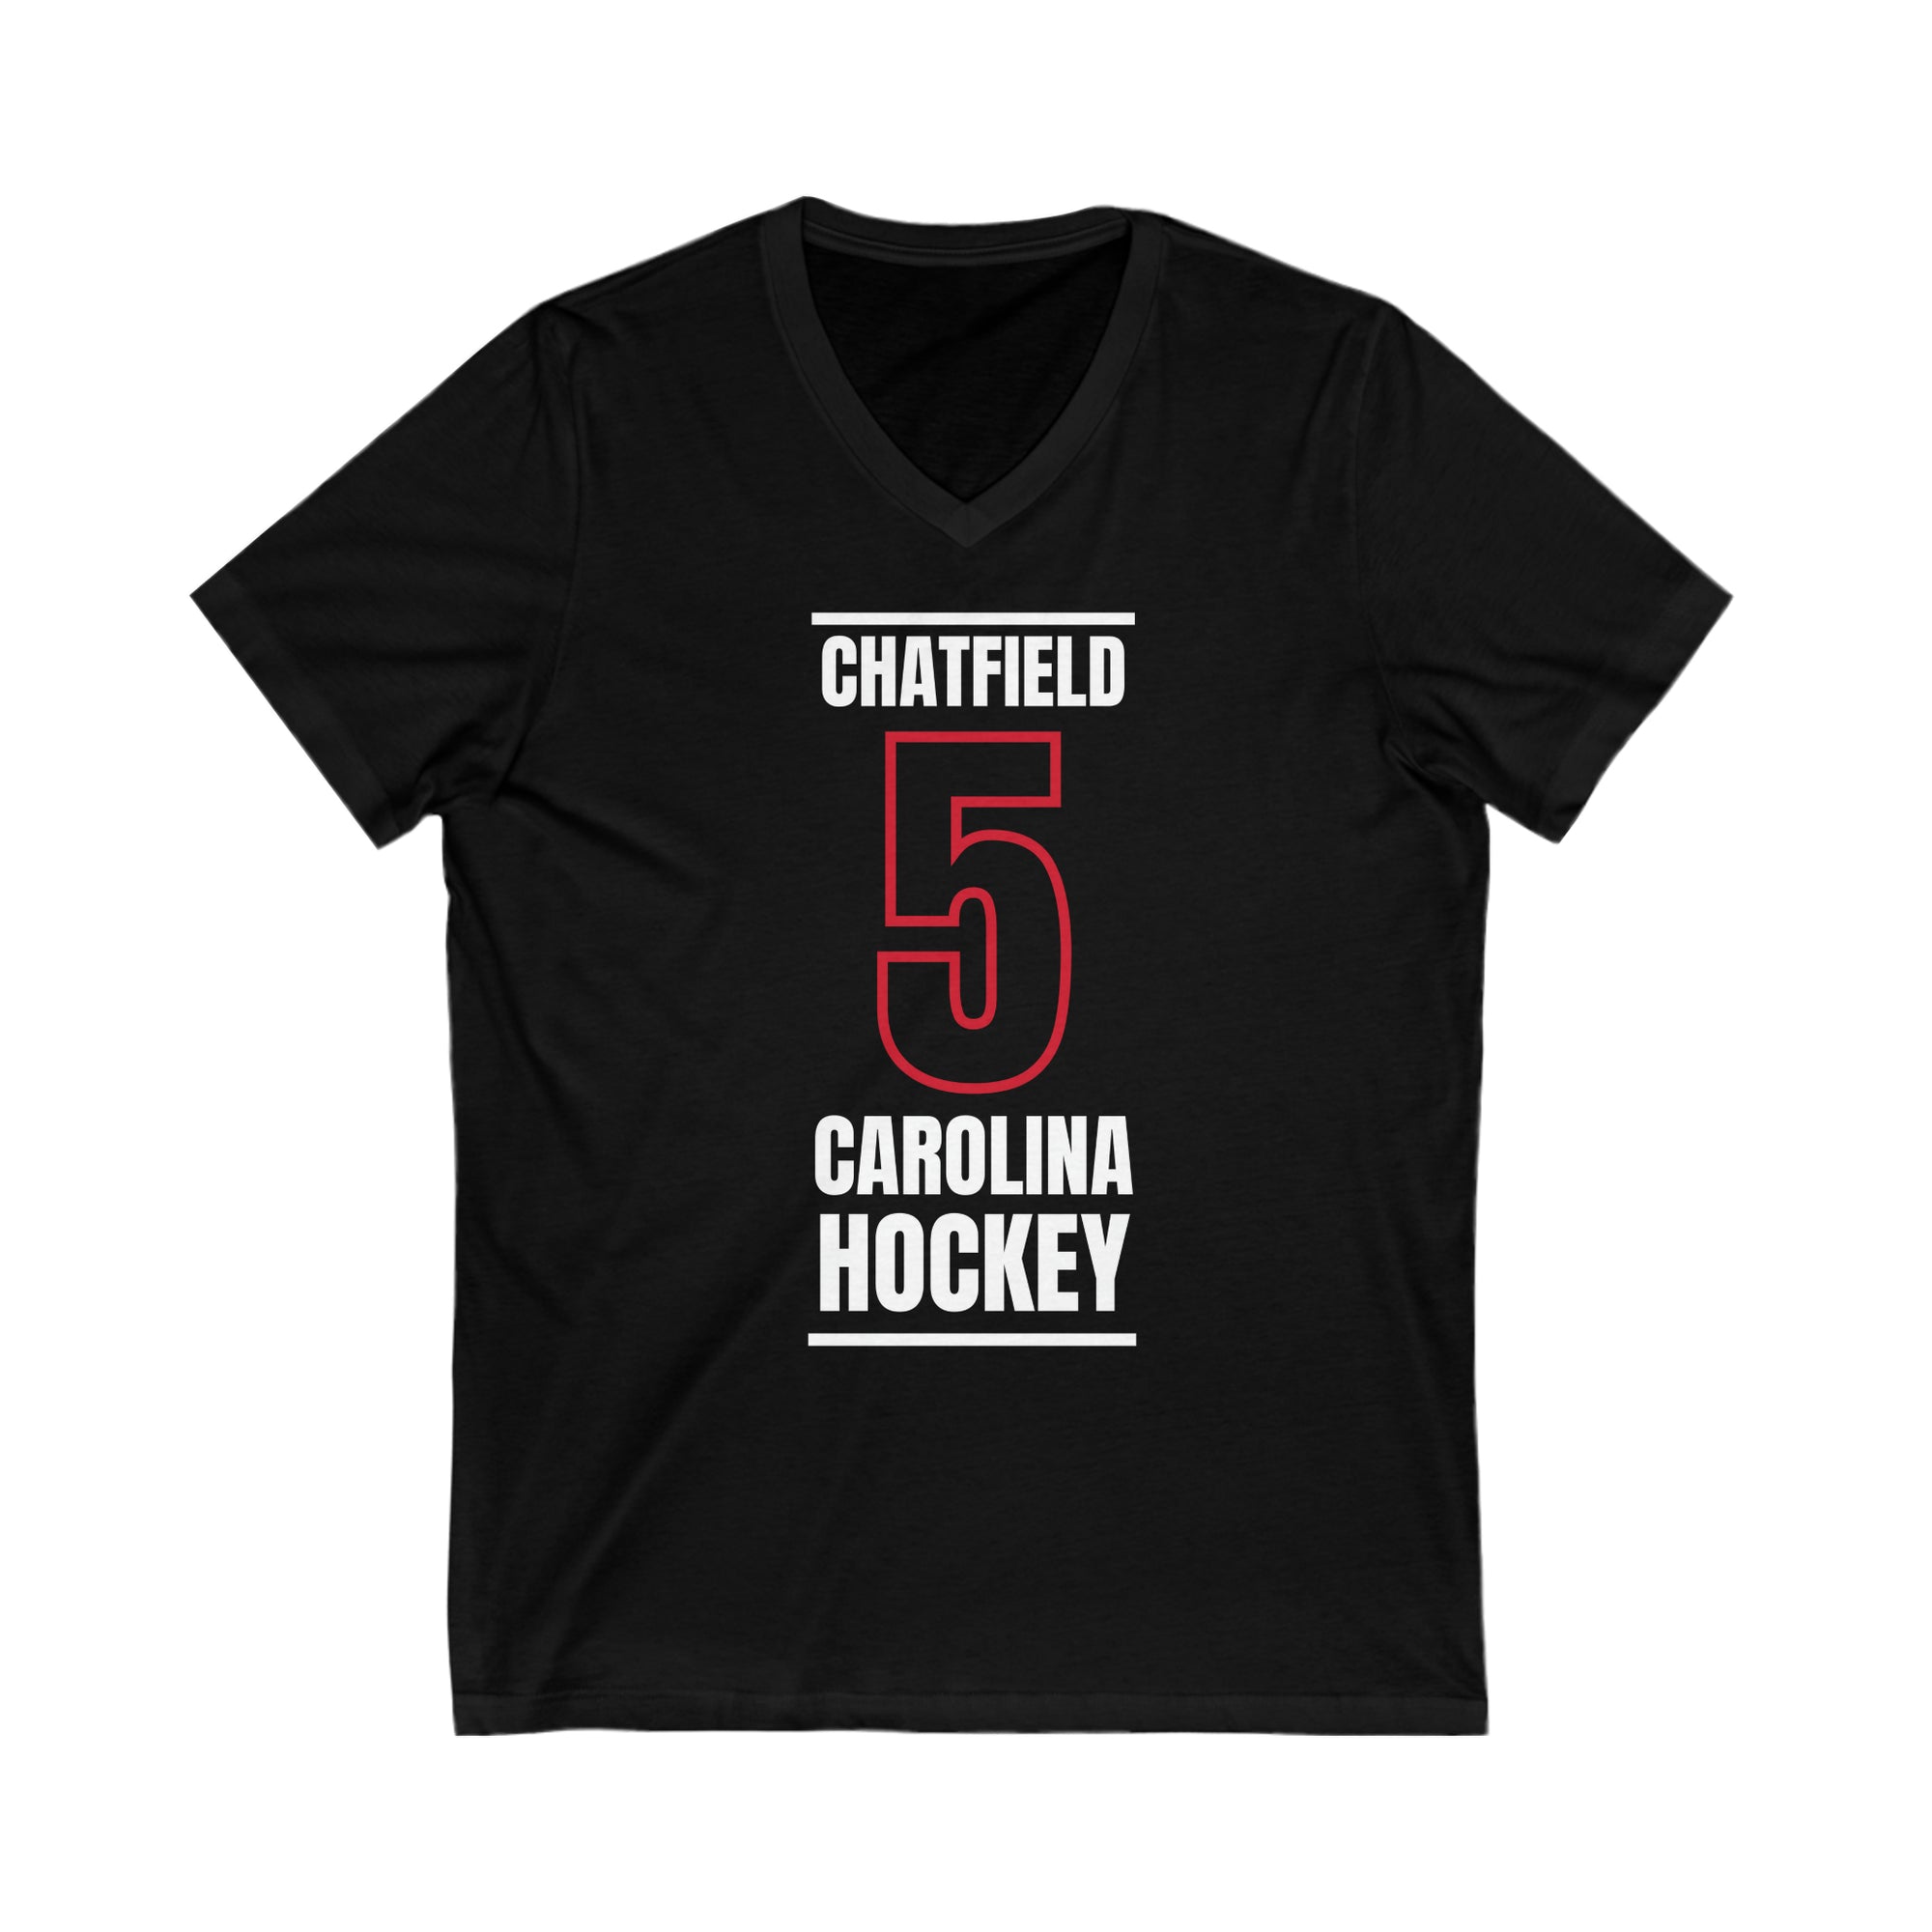 Chatfield 5 Carolina Hockey Black Vertical Design Unisex V-Neck Tee